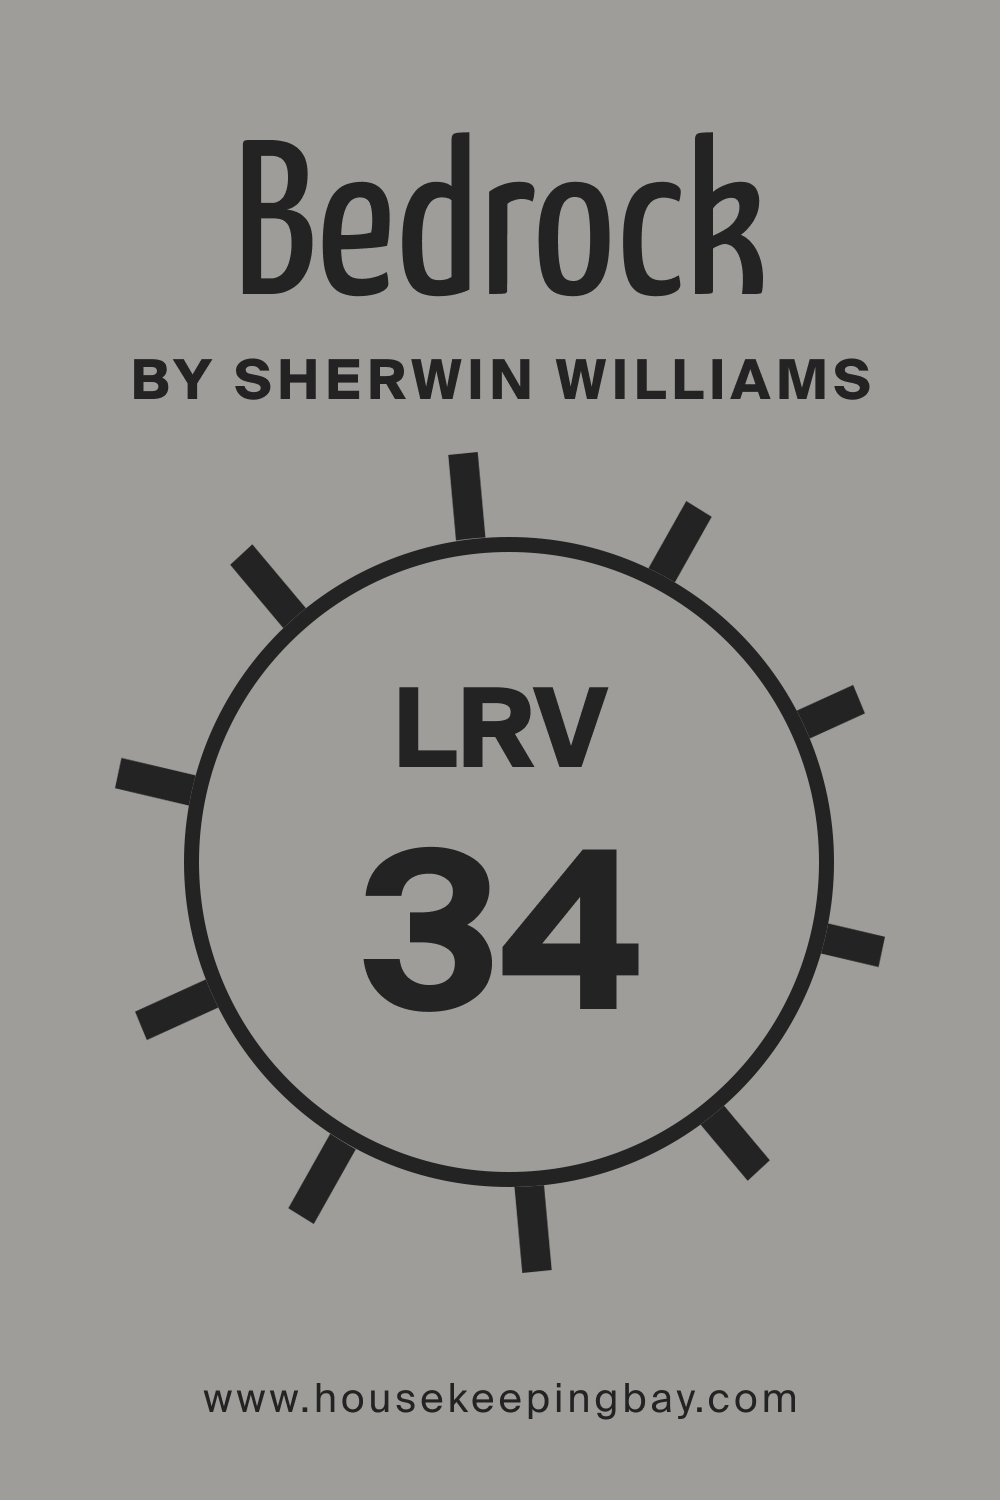 SW 9563 Bedrock by Sherwin Williams. LRV 34